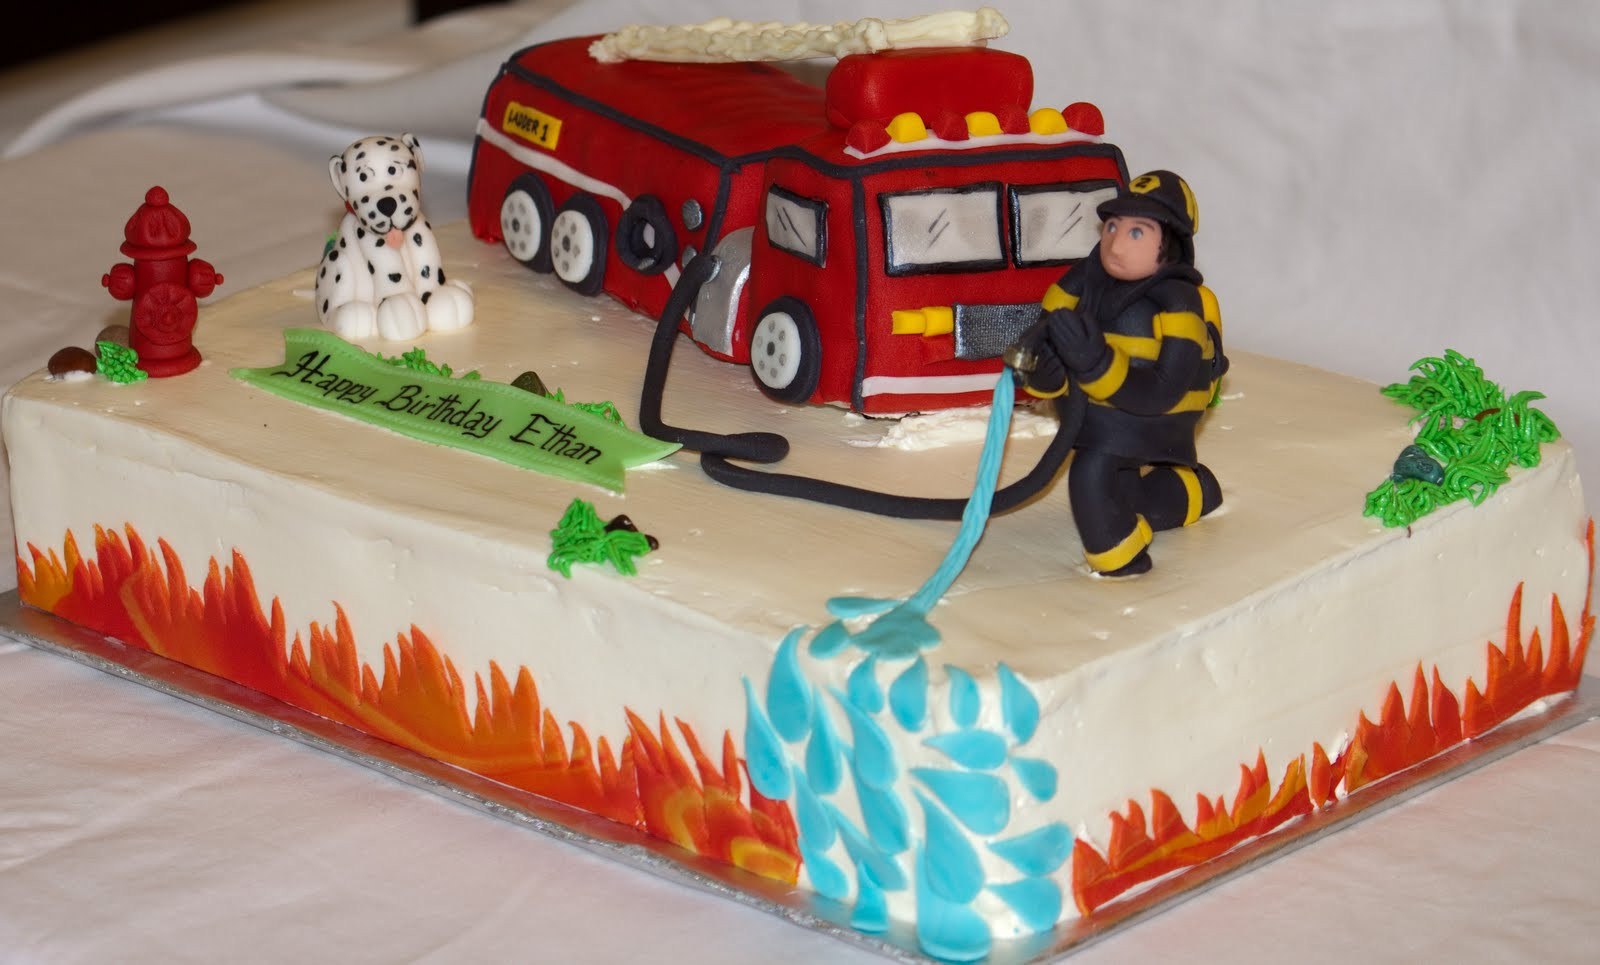 Firetruck Birthday Cake
 Firetruck cake